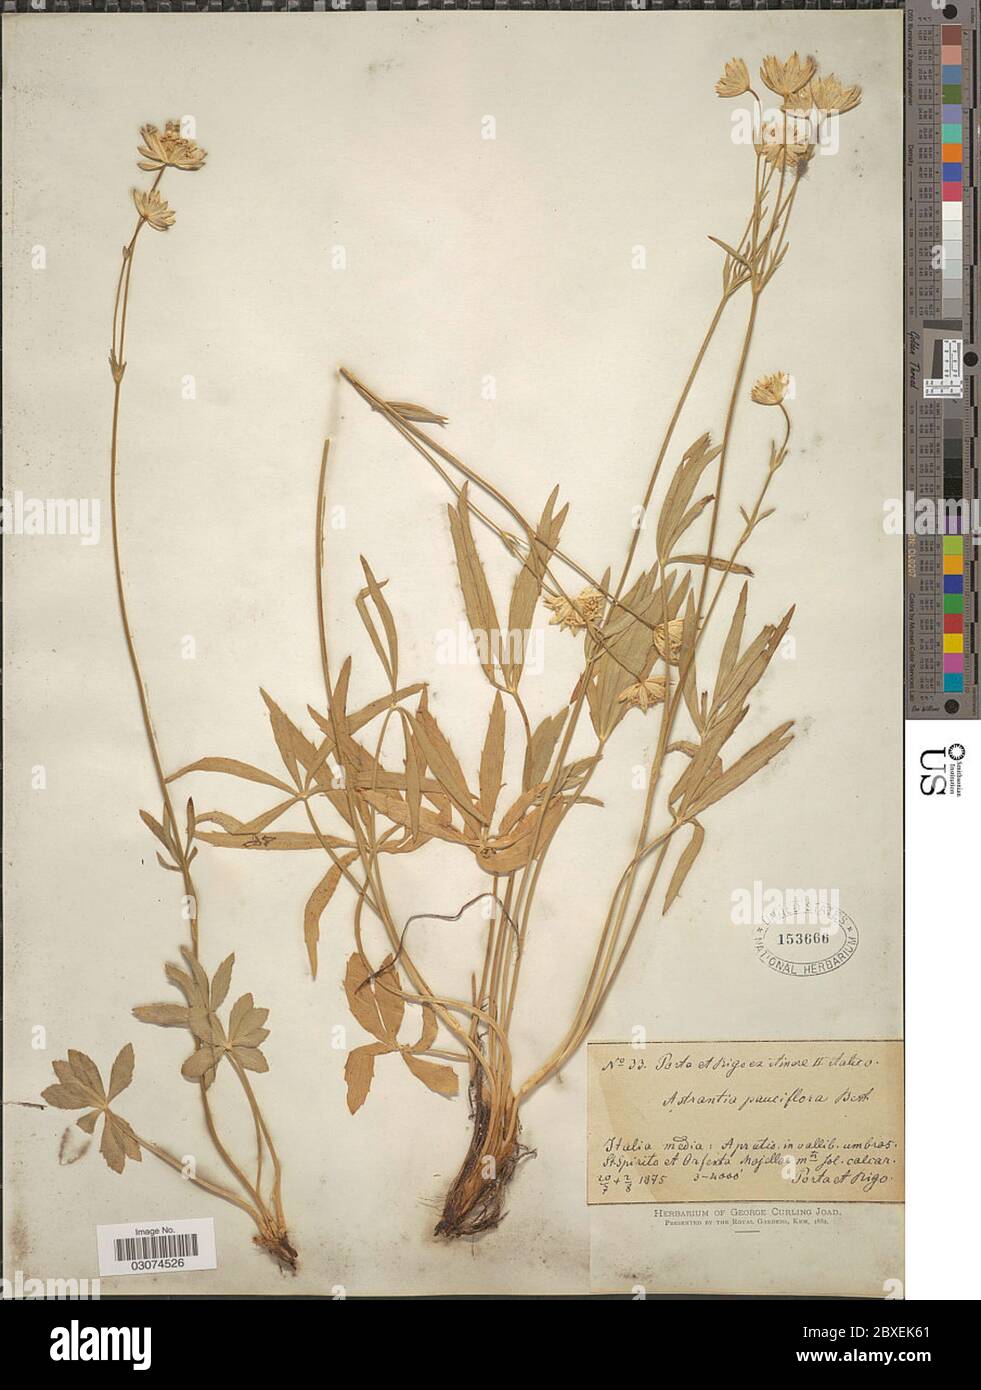 Astrantia pauciflora Bertol Astrantia pauciflora Bertol. Stock Photo